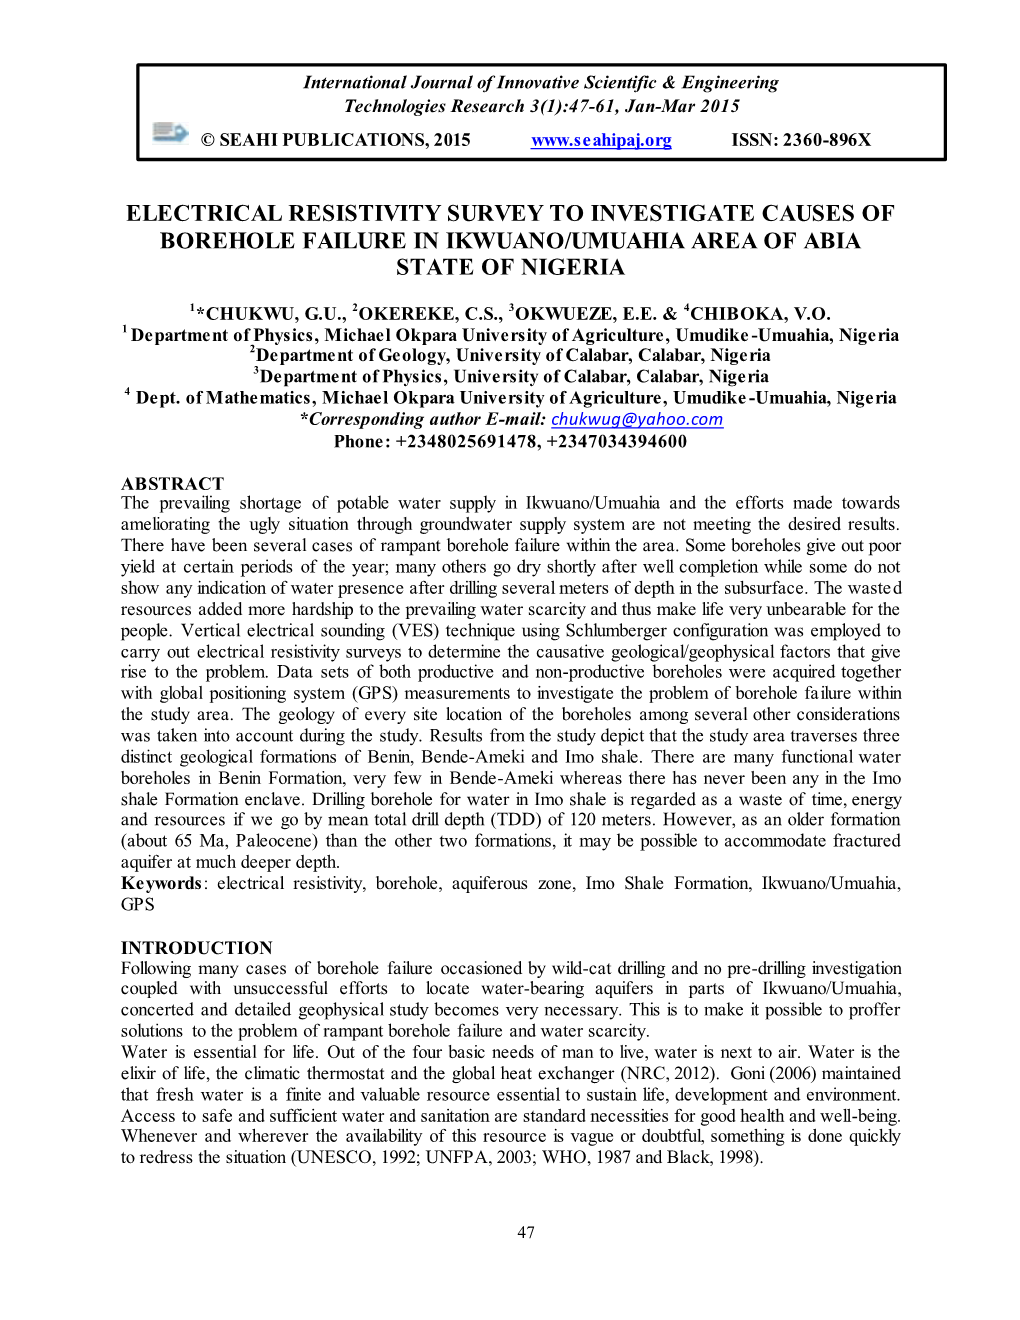 Electrical Resistivity Survey to Investigate Causes of Borehole Failure in Ikwuano/Umuahia Area of Abia State of Nigeria